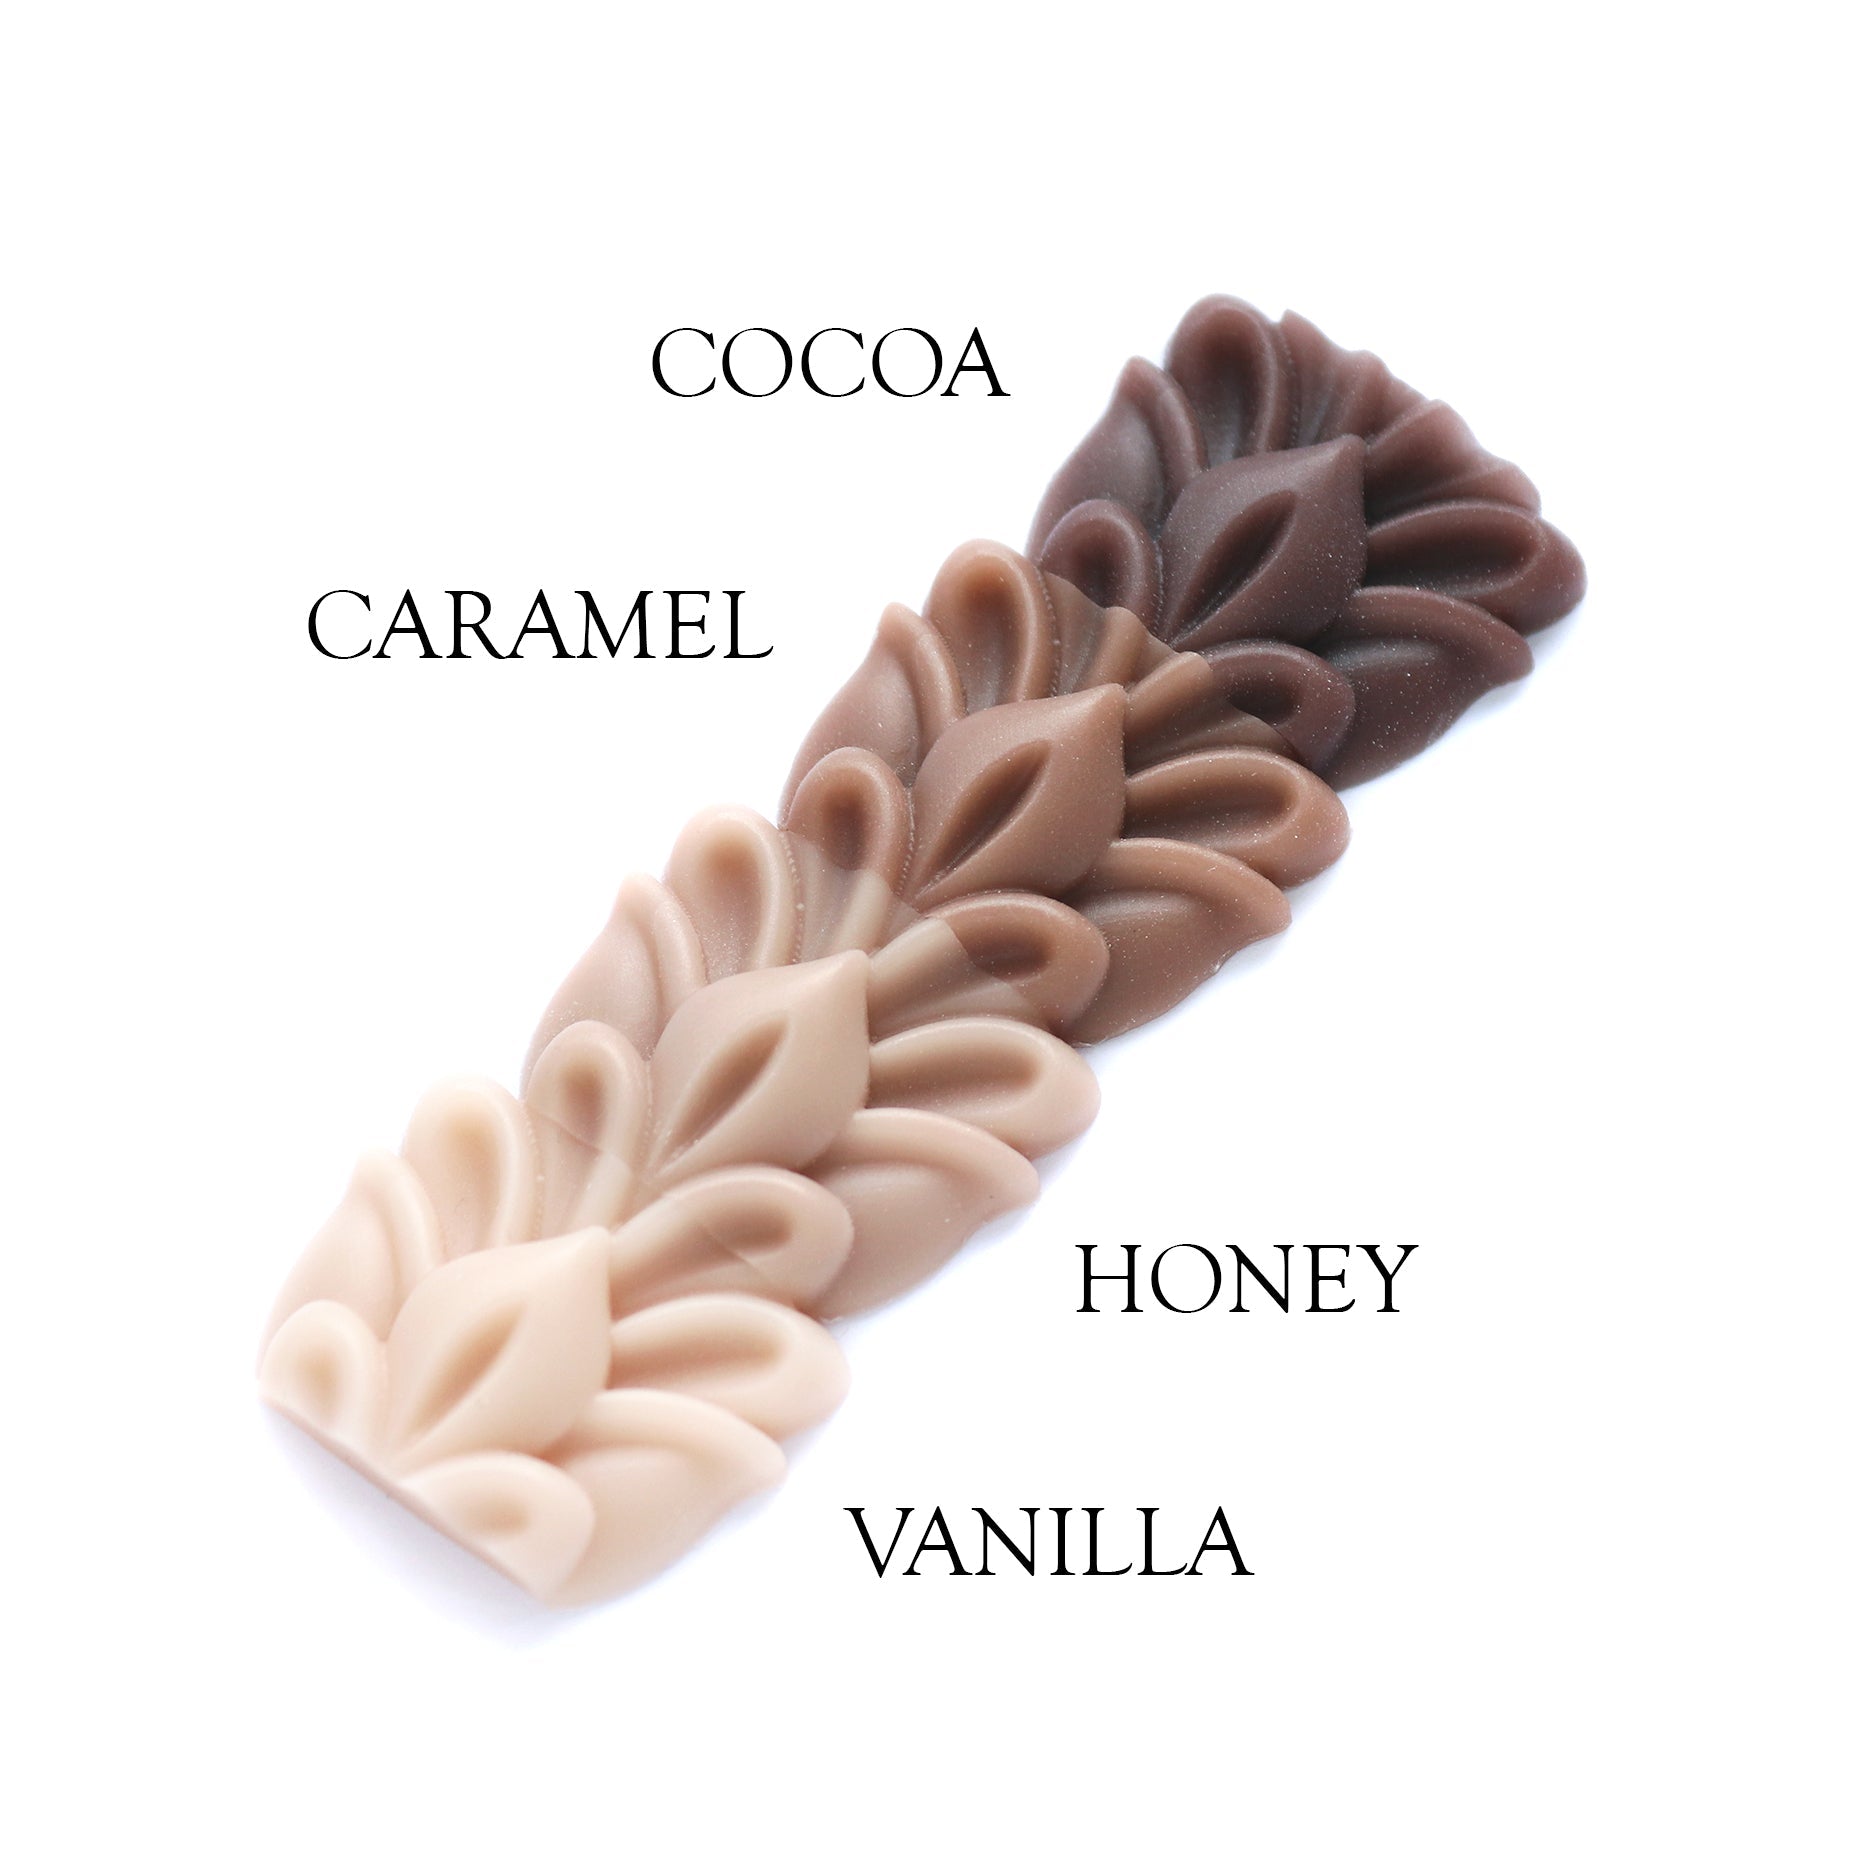 Colour samples or Vanilla, Honey, Caramel, and Cocoa.